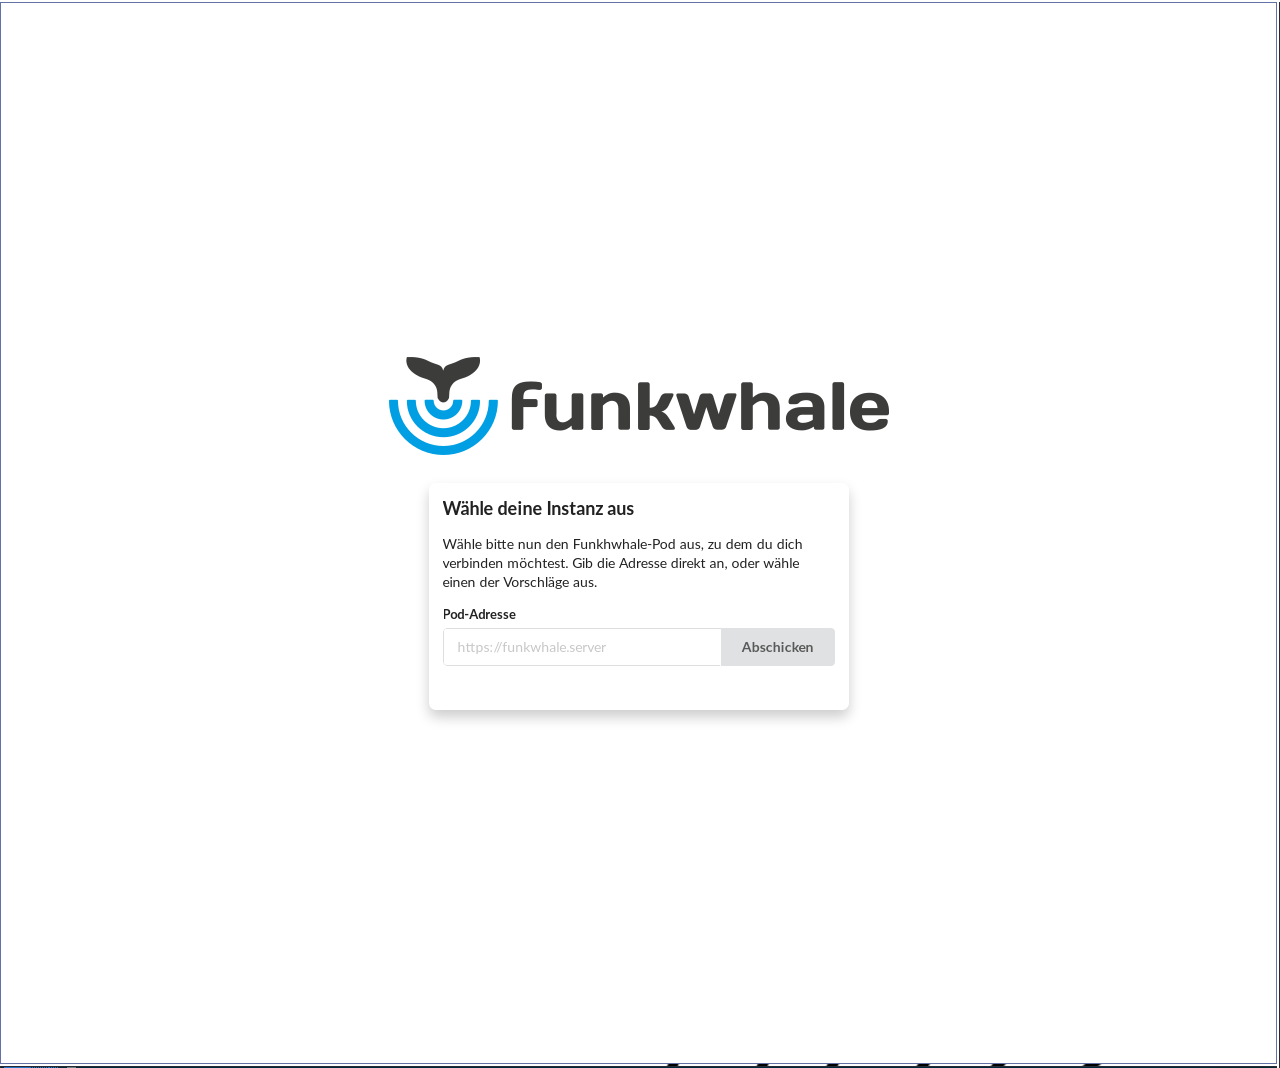 A screenshot of a Funkwhale instance selector running in a desktop app